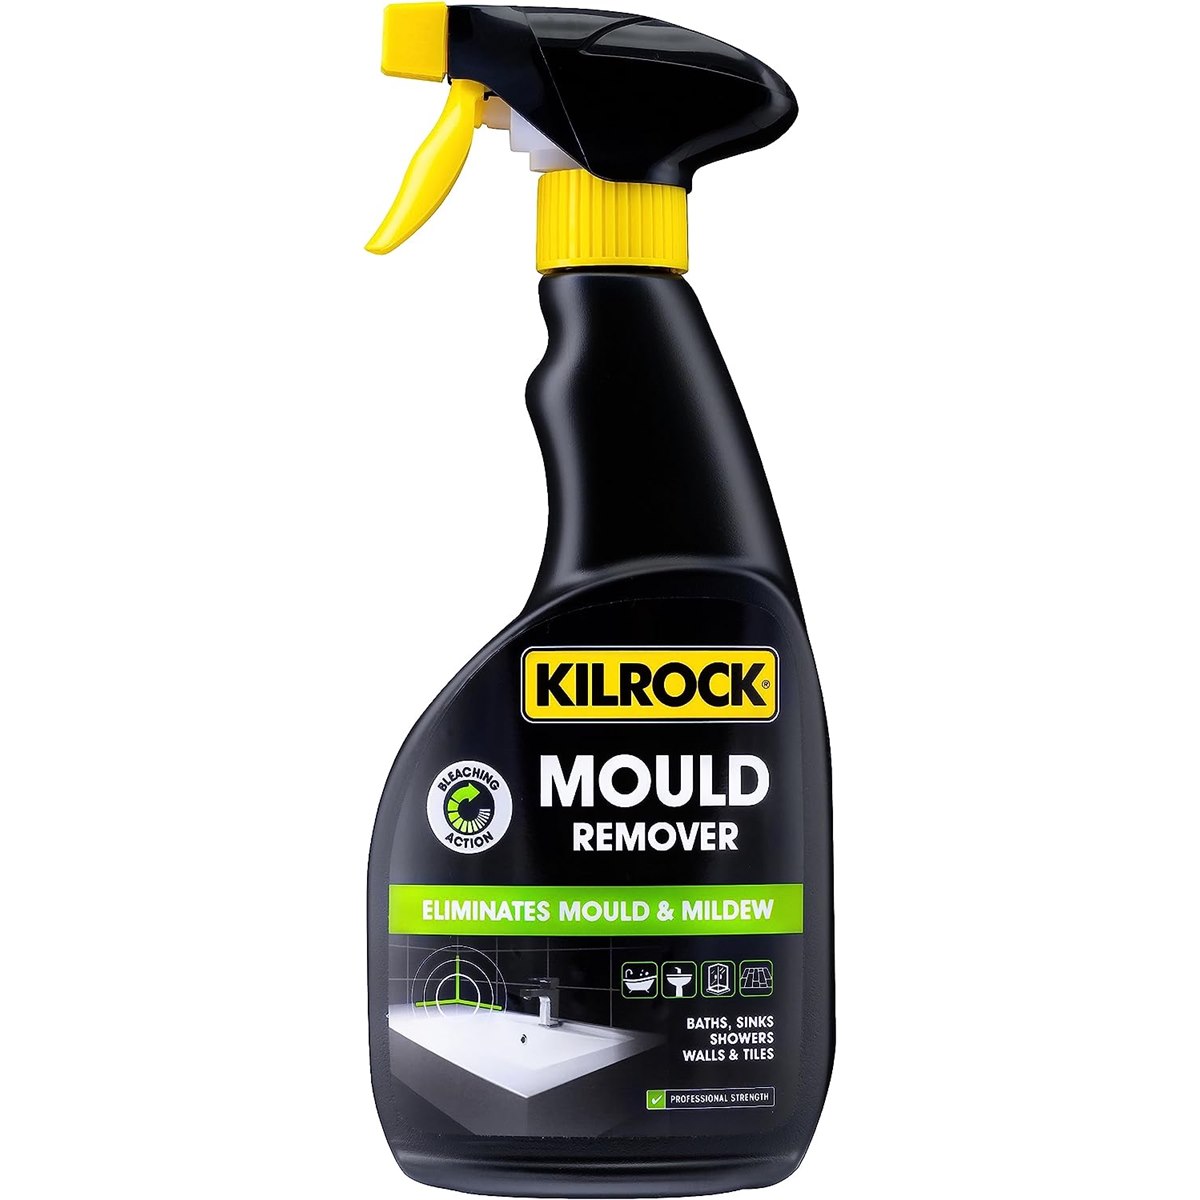 Kilrock Professional Strength Mould Remover Spray 500ml